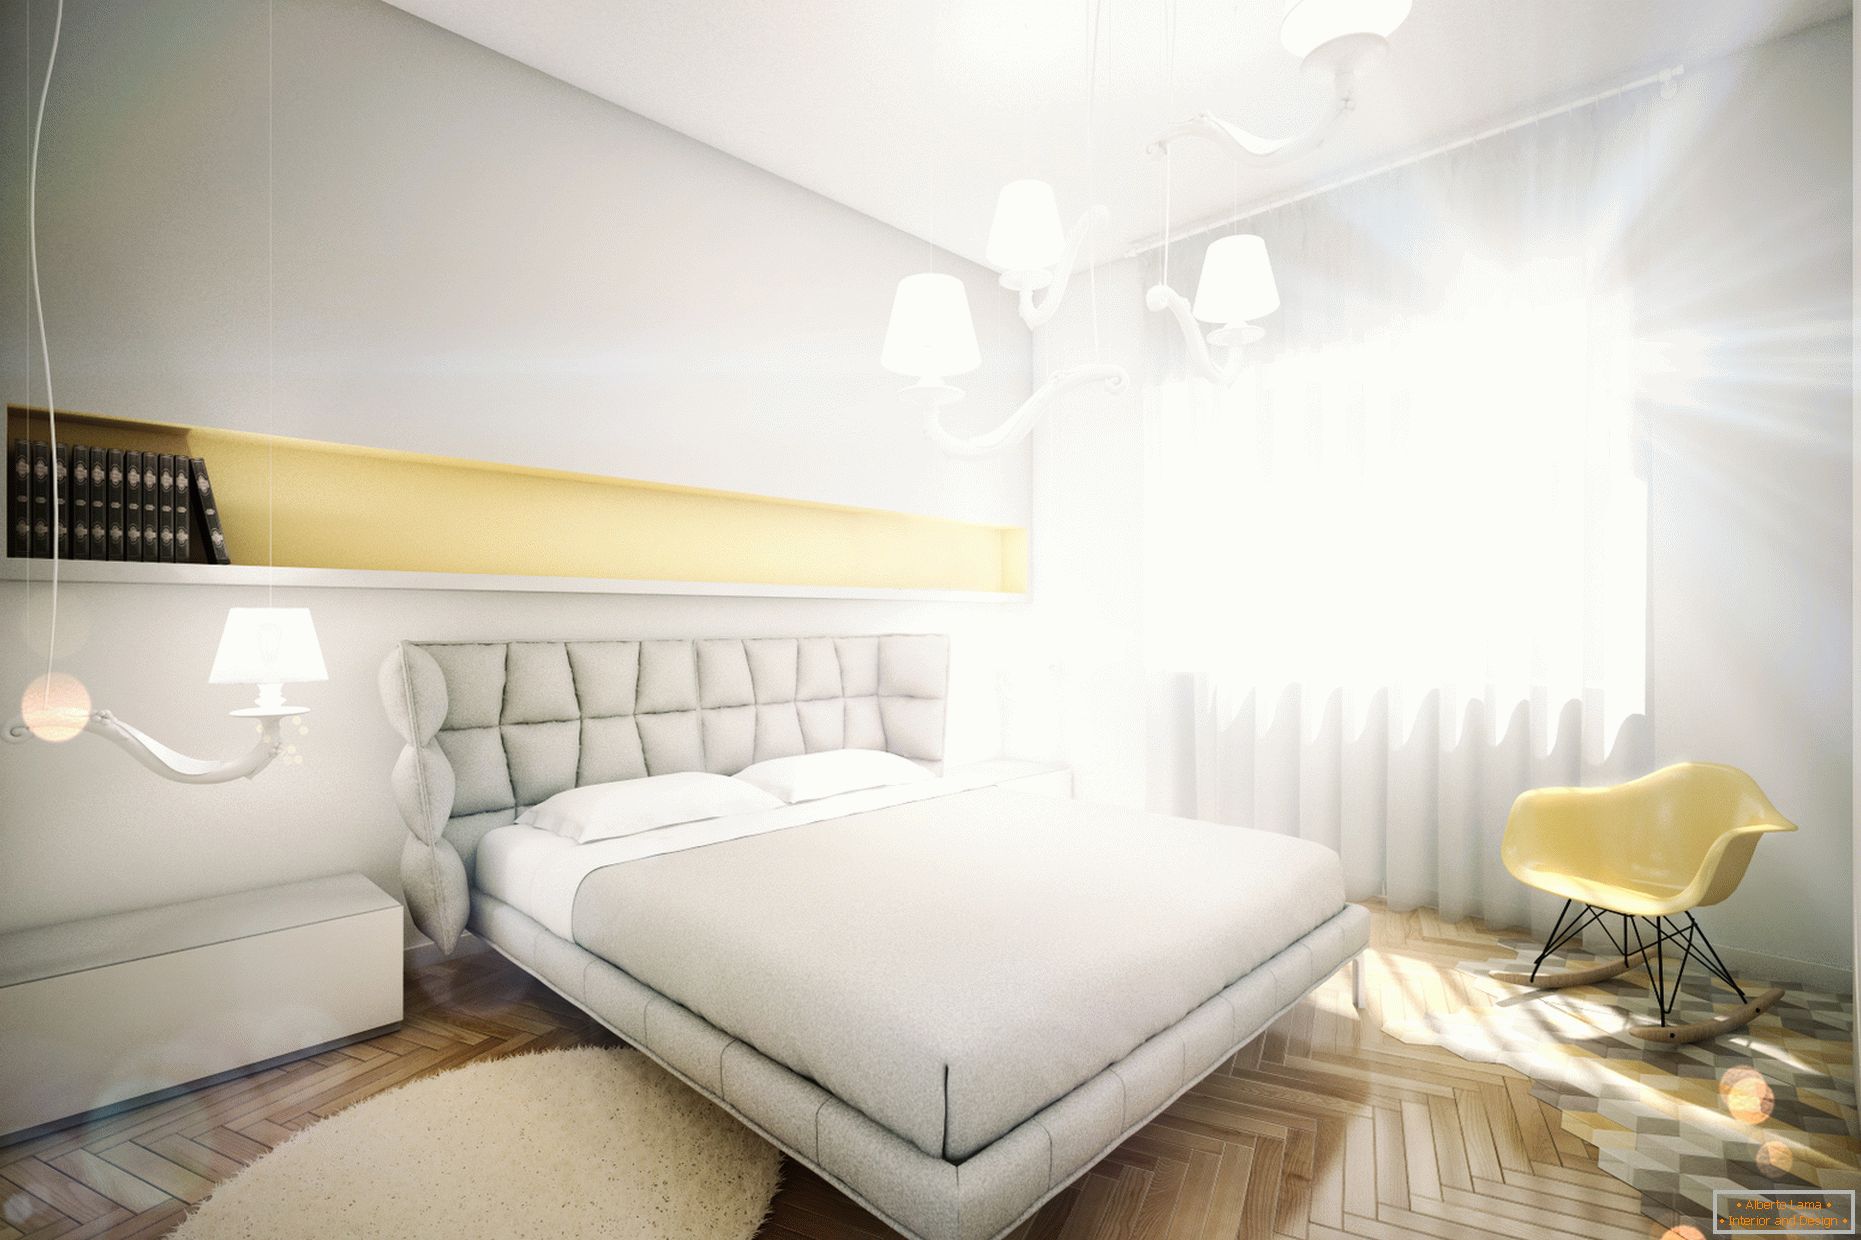 Design apartment in pastel colors: bedroom